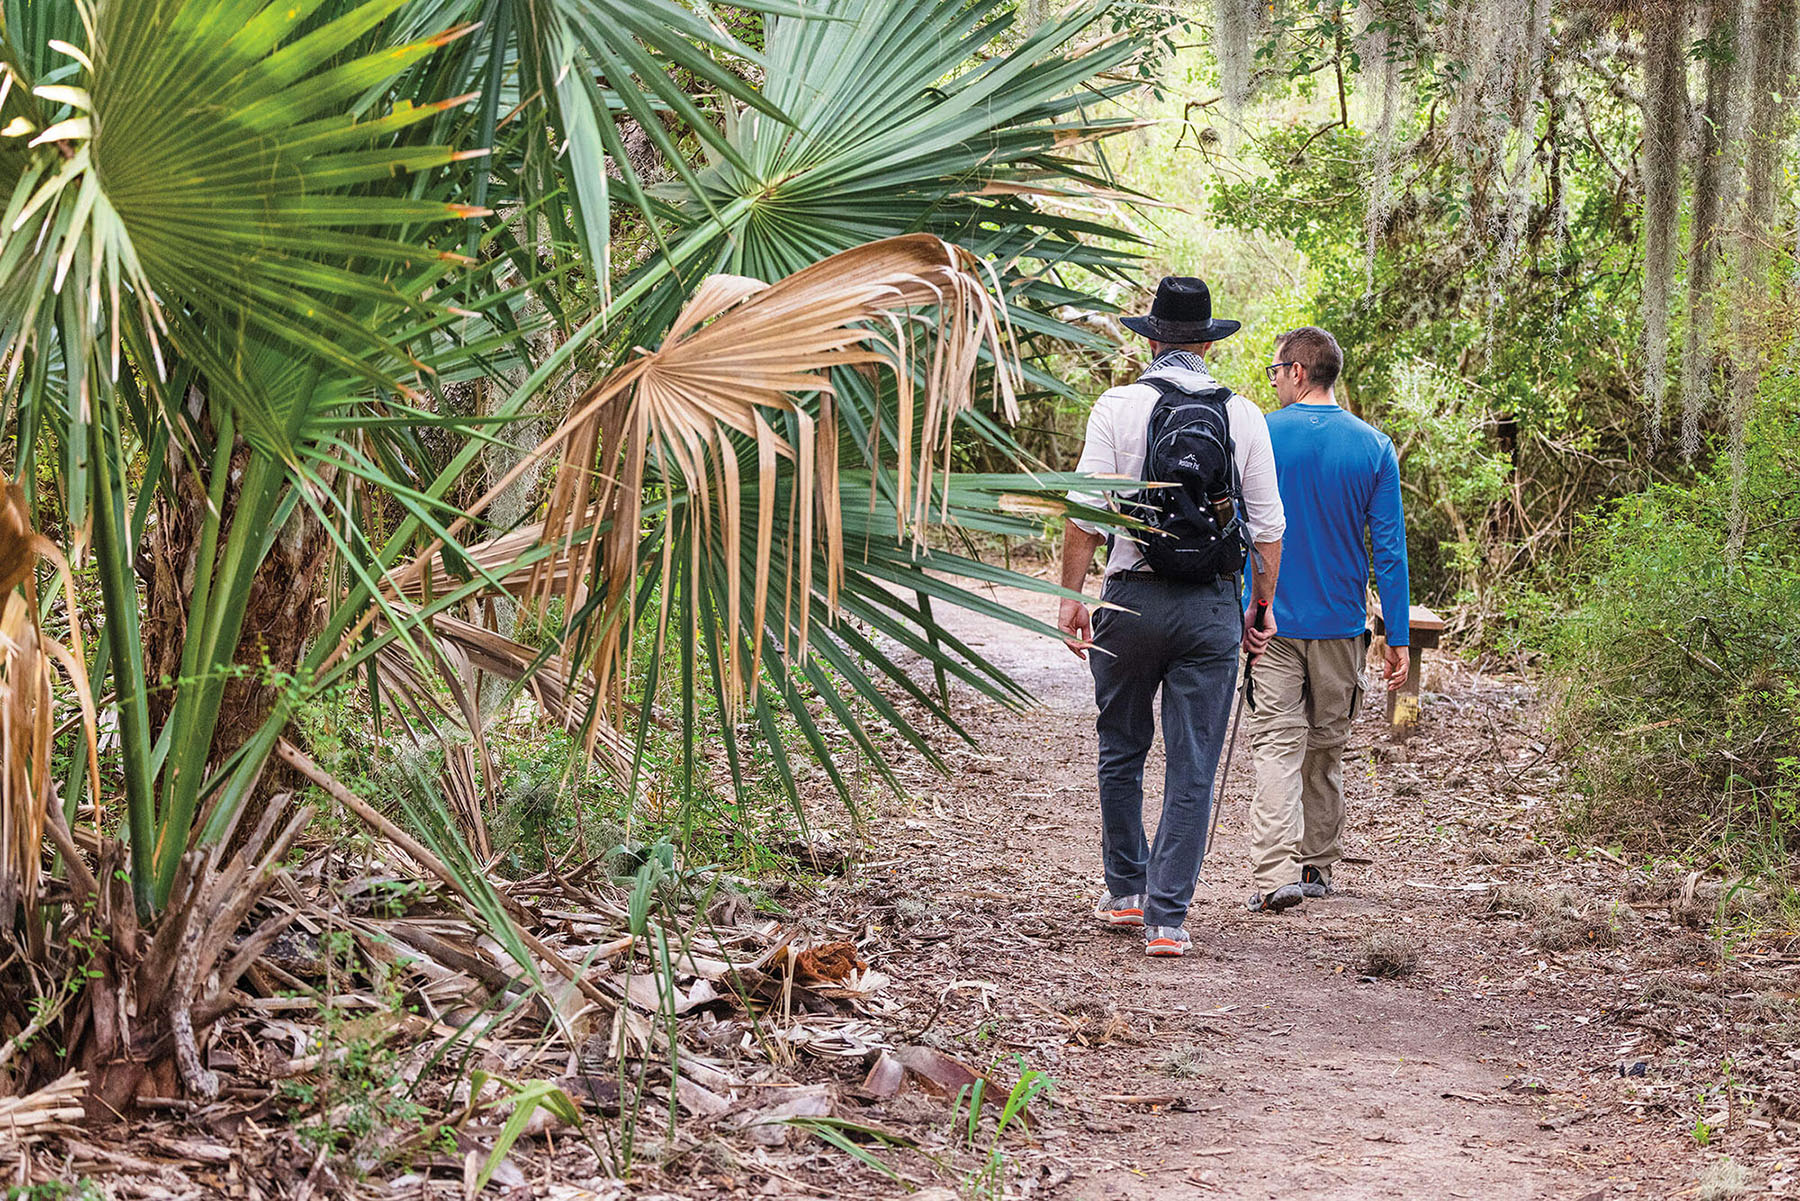 Two men walk down a dirt path beneath large green palmettos